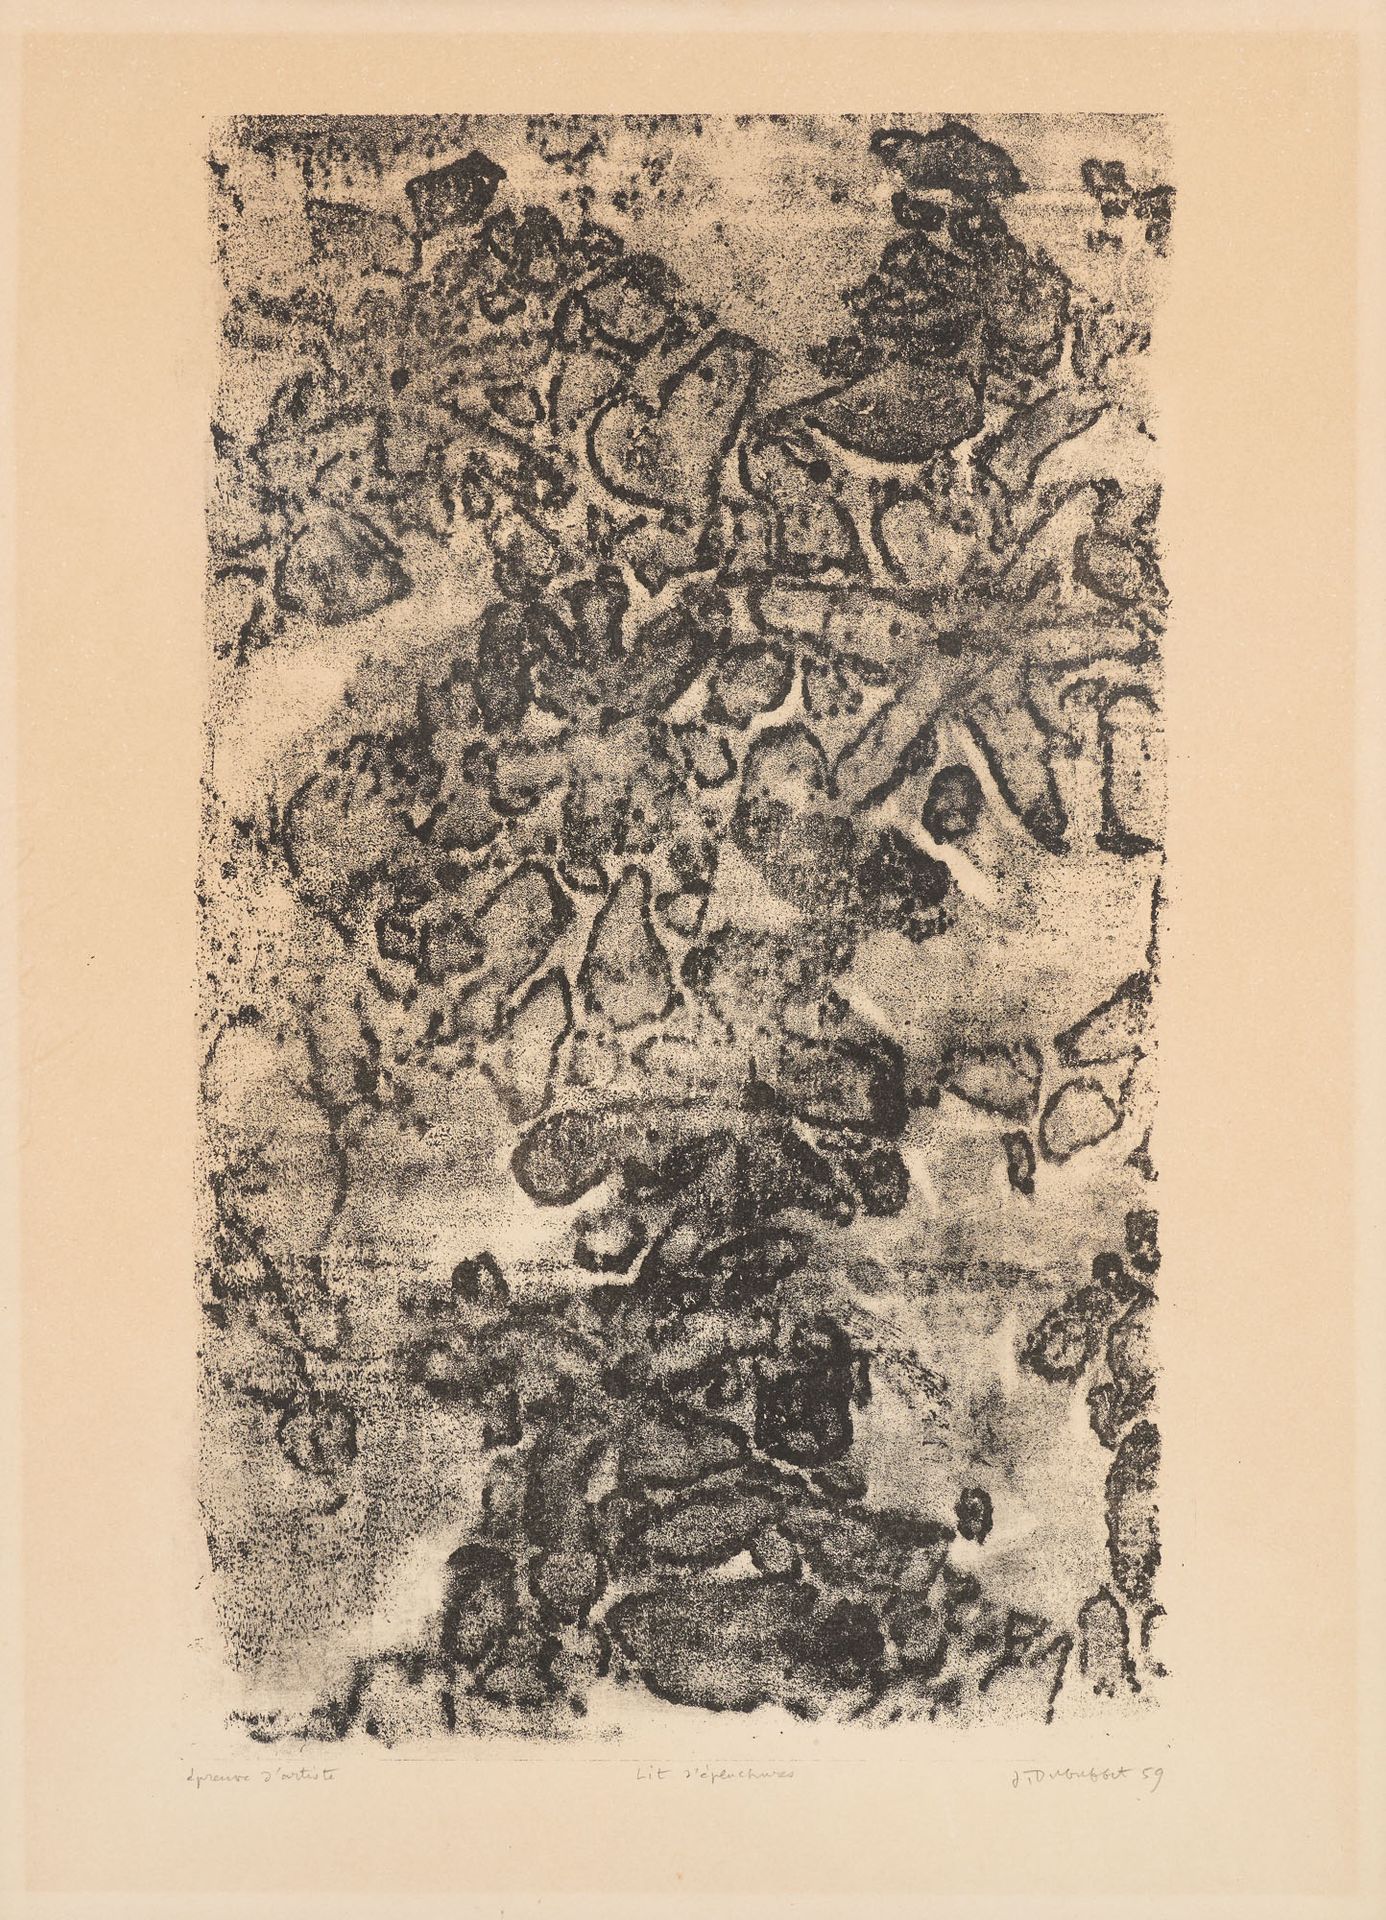 Jean DUBUFFET École française (1901-1985) Print, lithograph: "Bed of peelings".
&hellip;